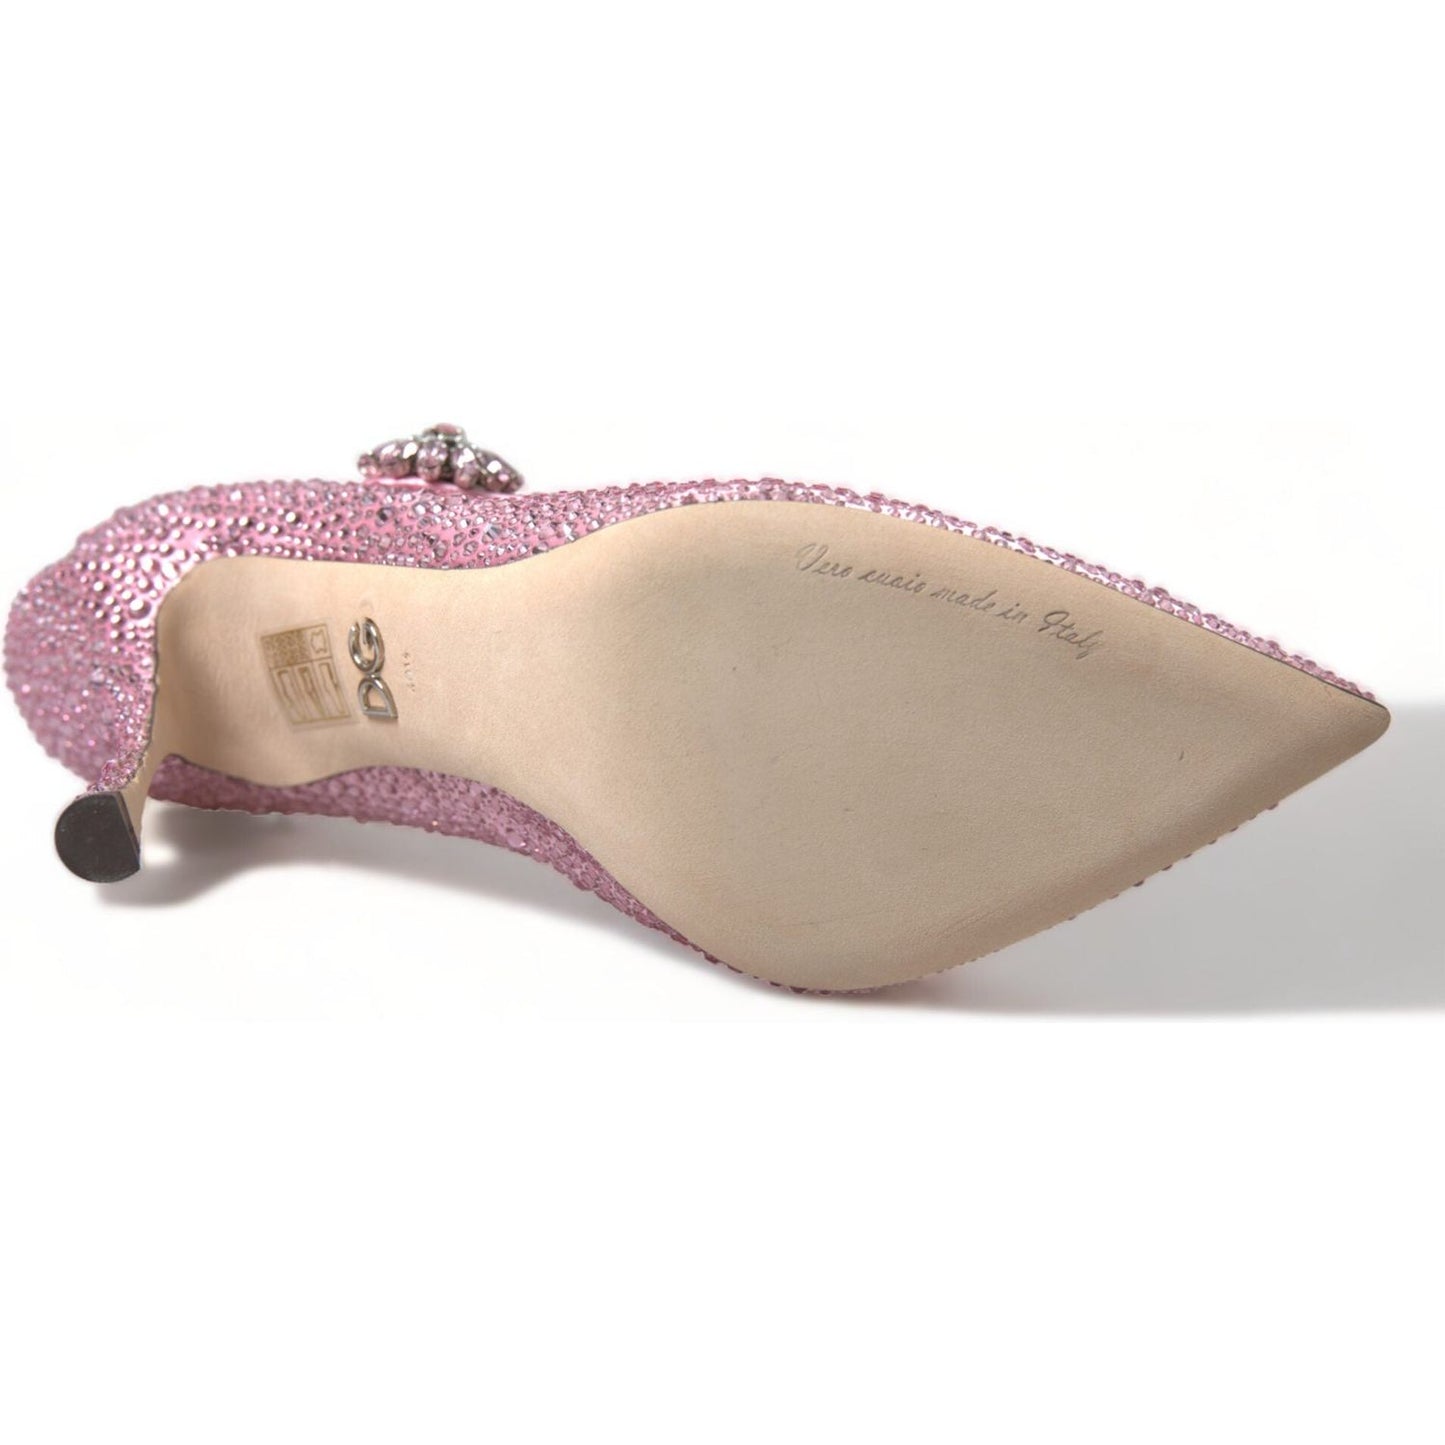 Dolce & Gabbana Enchanting Pink Crystal Pumps pink-strass-crystal-heels-pumps-shoes 465A9312-bg-scaled-31abbbd8-e7f.jpg